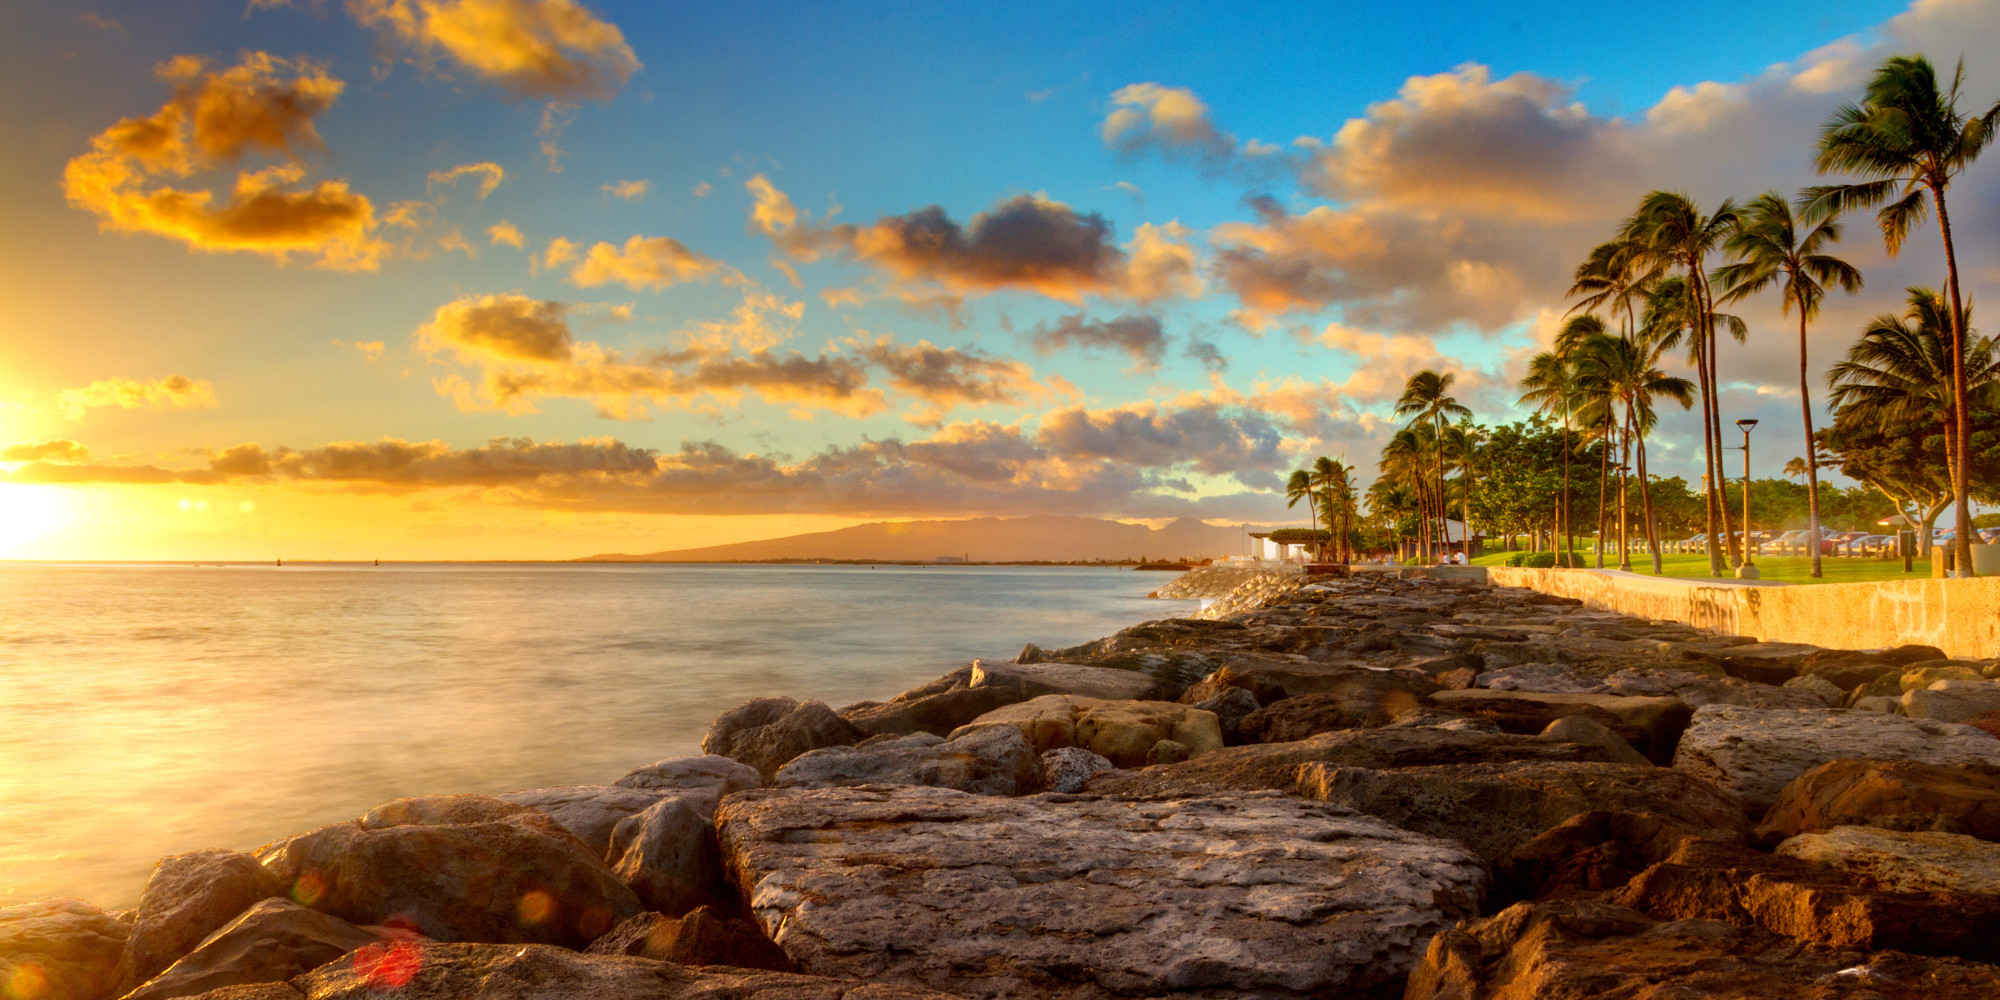 hawaii travel huffpost hi islands getty honolulu stunning kakaako sunset